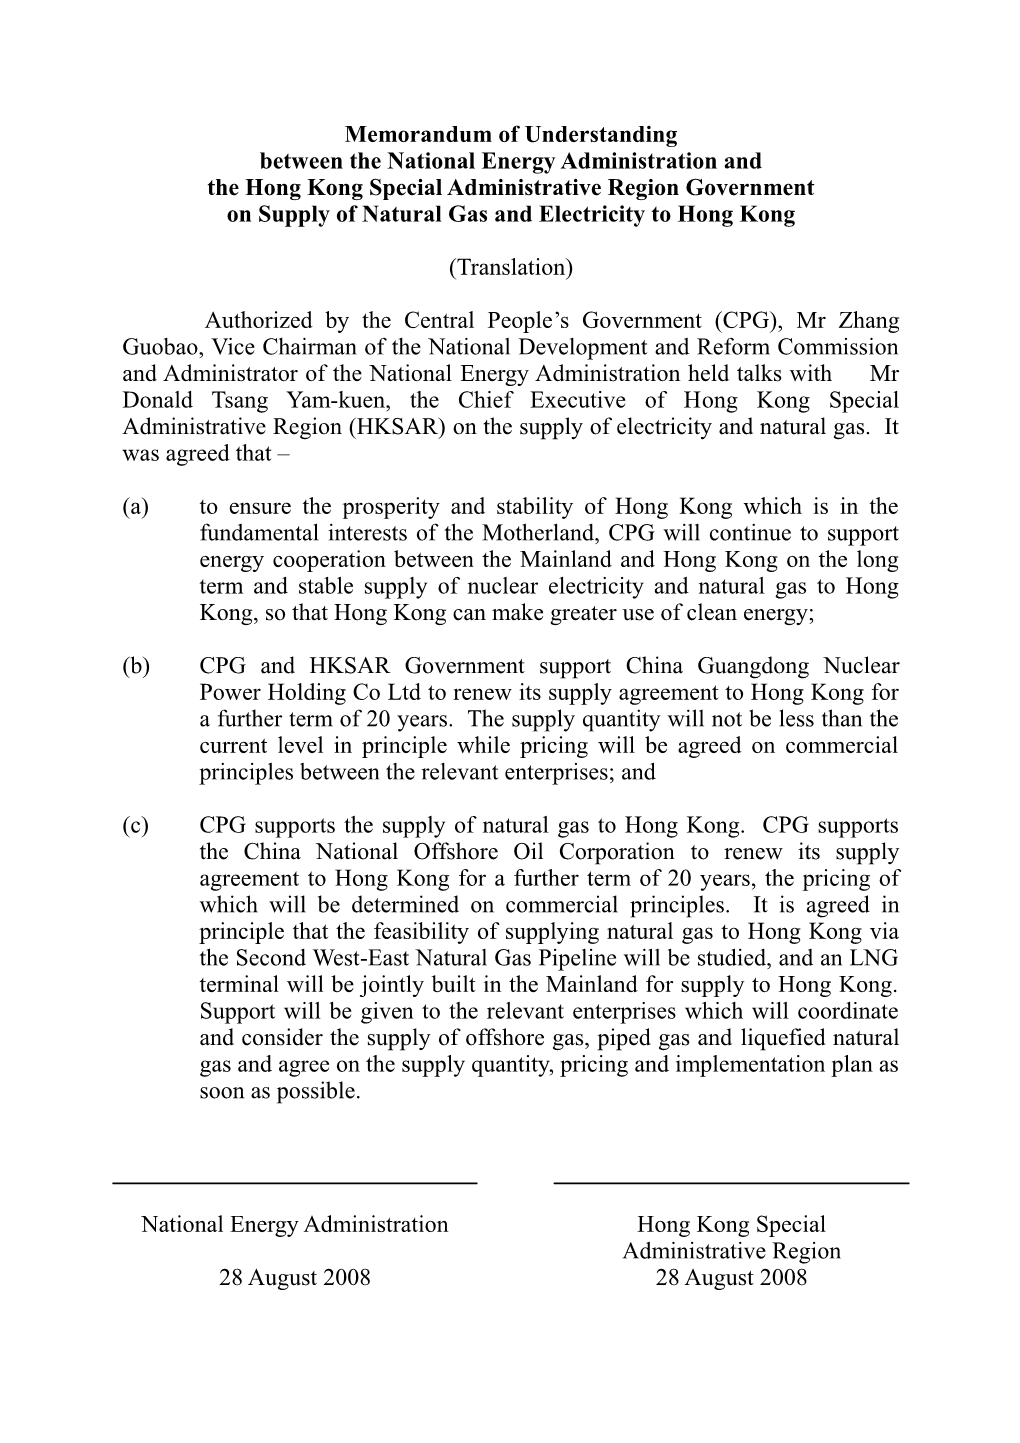 Memorandum of Understanding Between the National Energy Bureau and Hong Kong Special